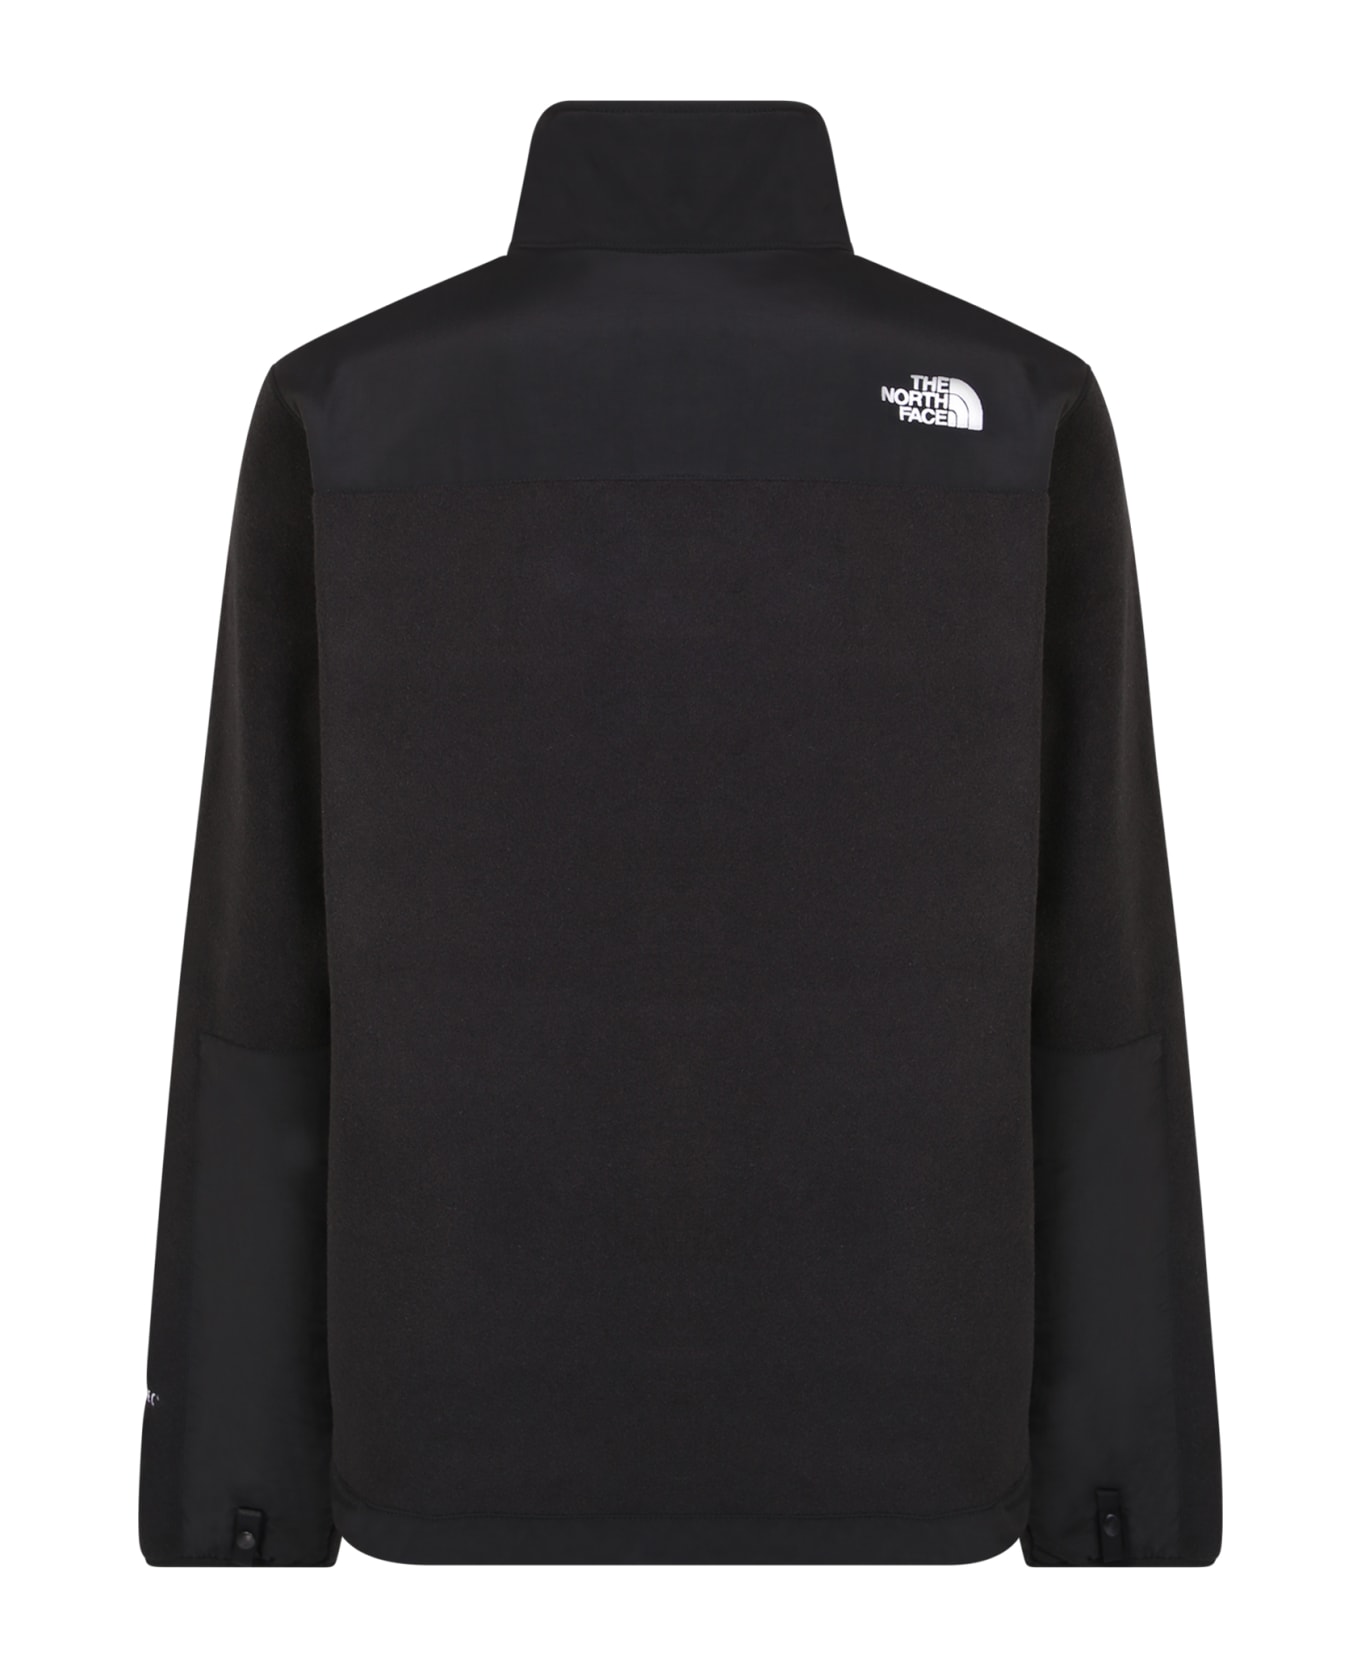 The North Face Fleece Jacket With Iconic Logo Black - Black ジャケット